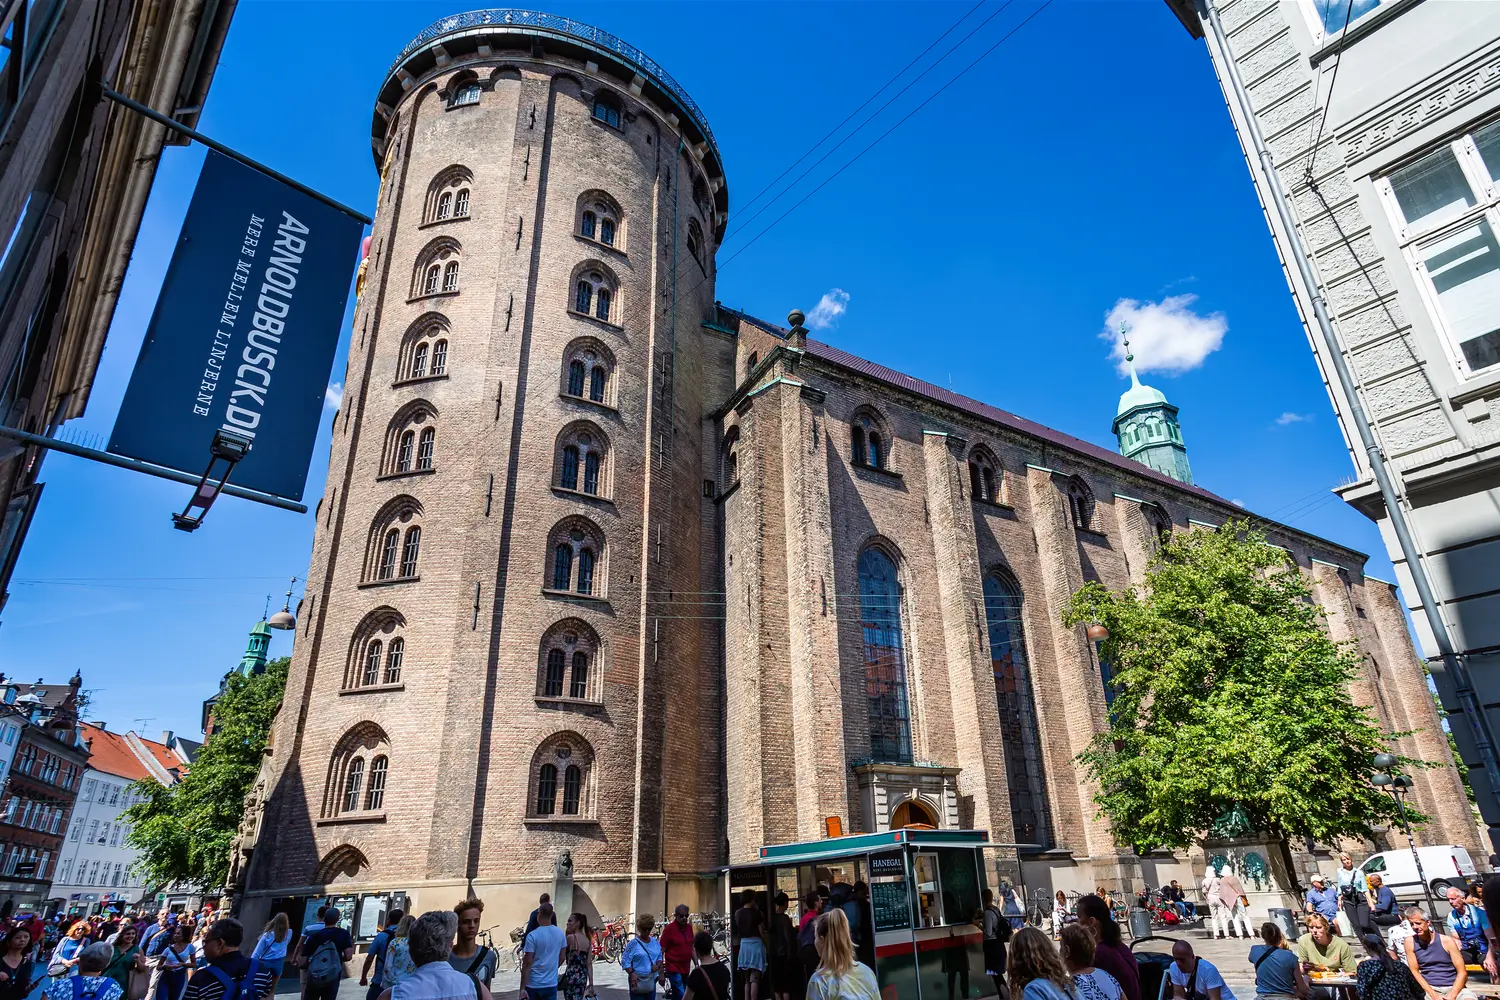 The round tower of Trinity Church in central Copenhagen, Denmark